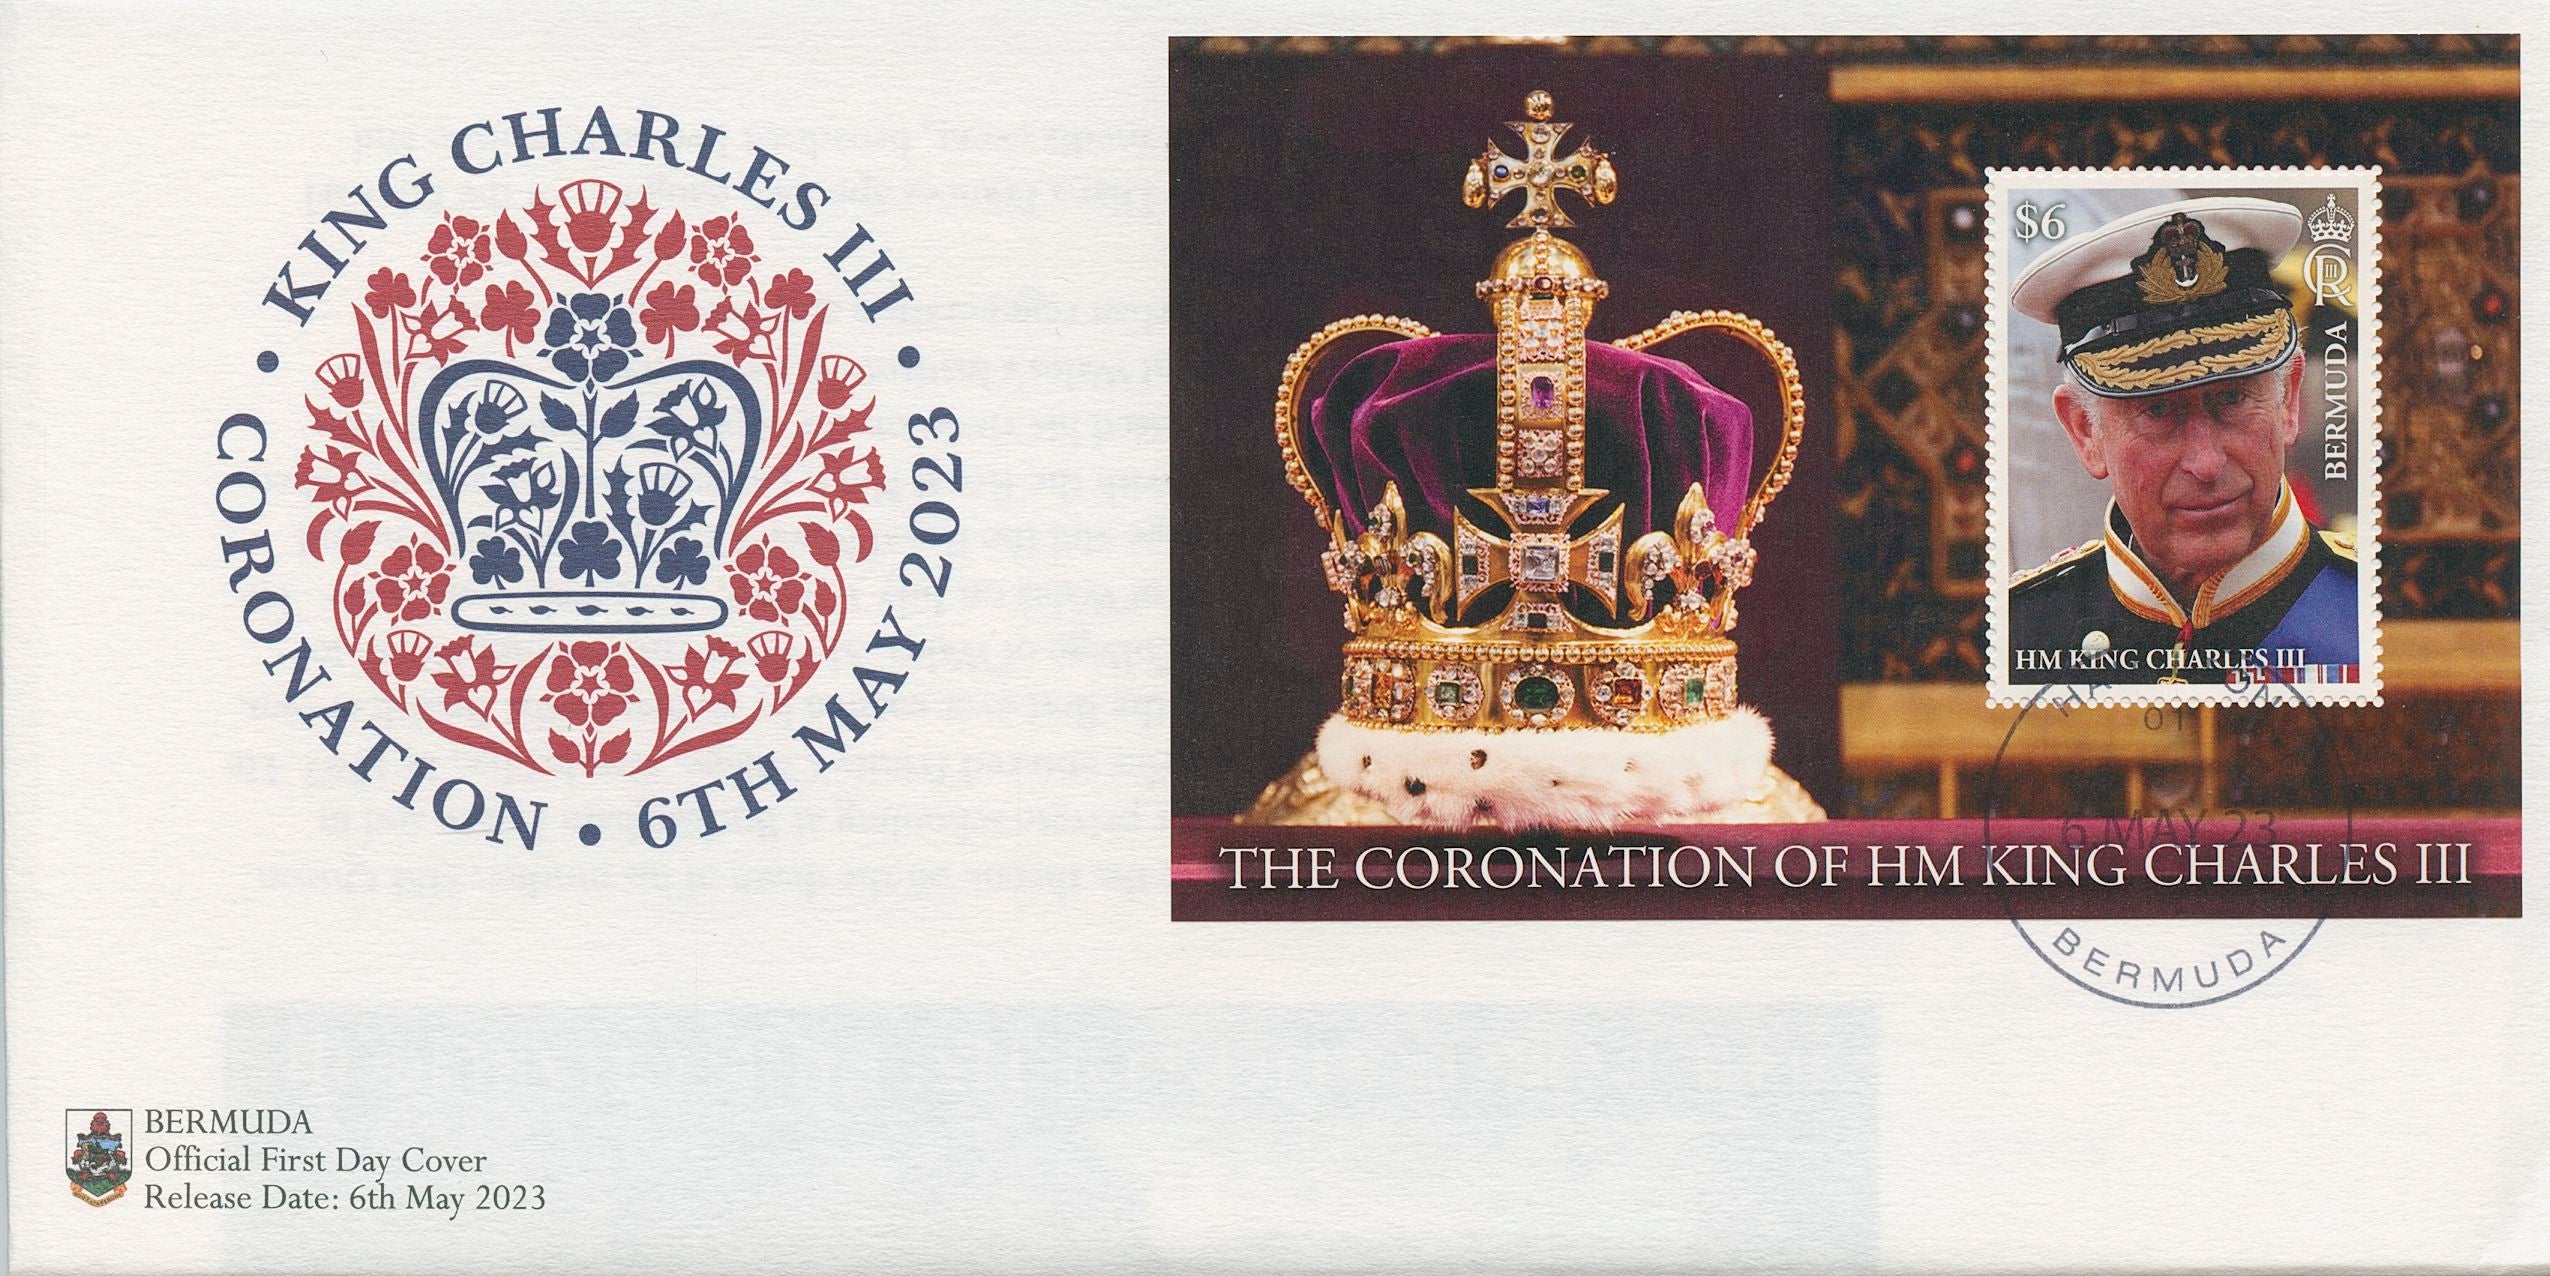 Bermuda 2023 FDC Royalty Stamps King Charles III Coronation 1v M/S